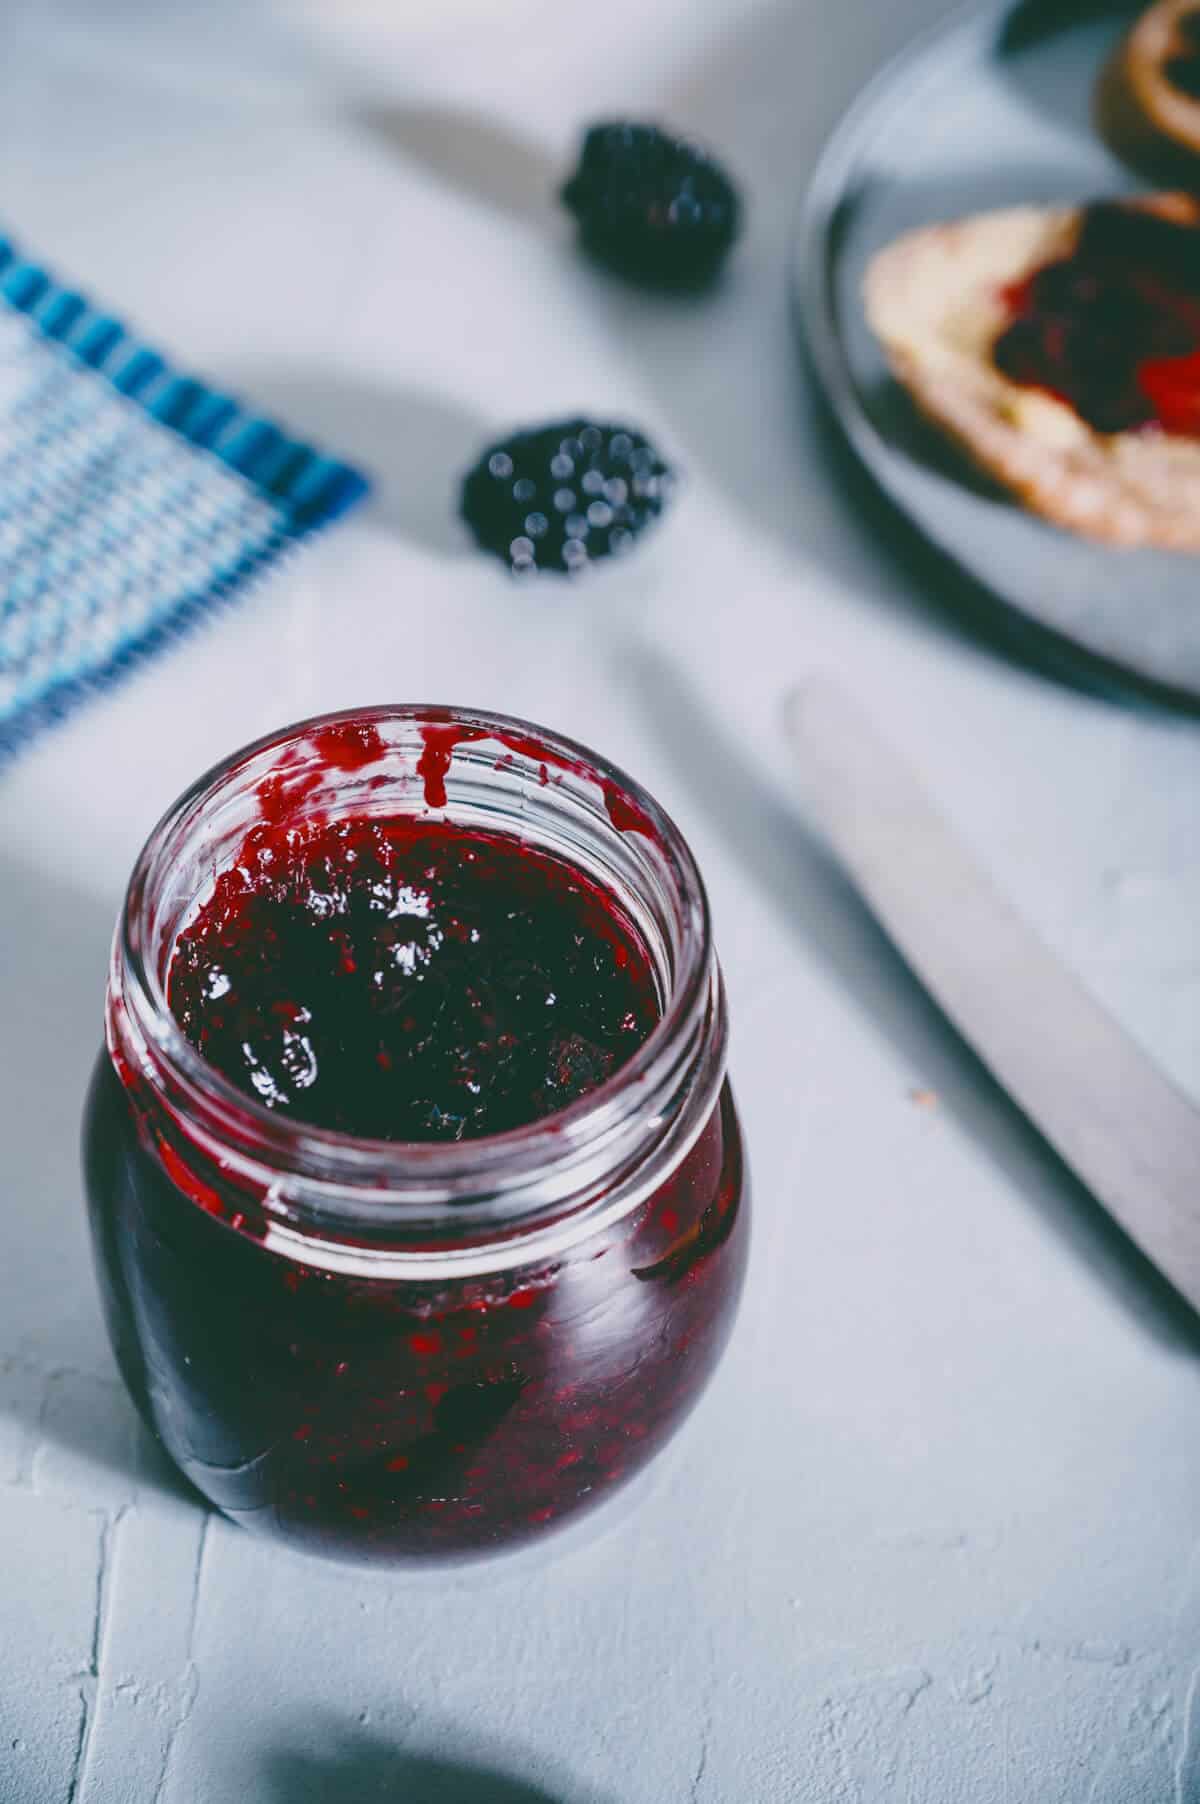 a jar of homemade blackberry jam on a grey table.